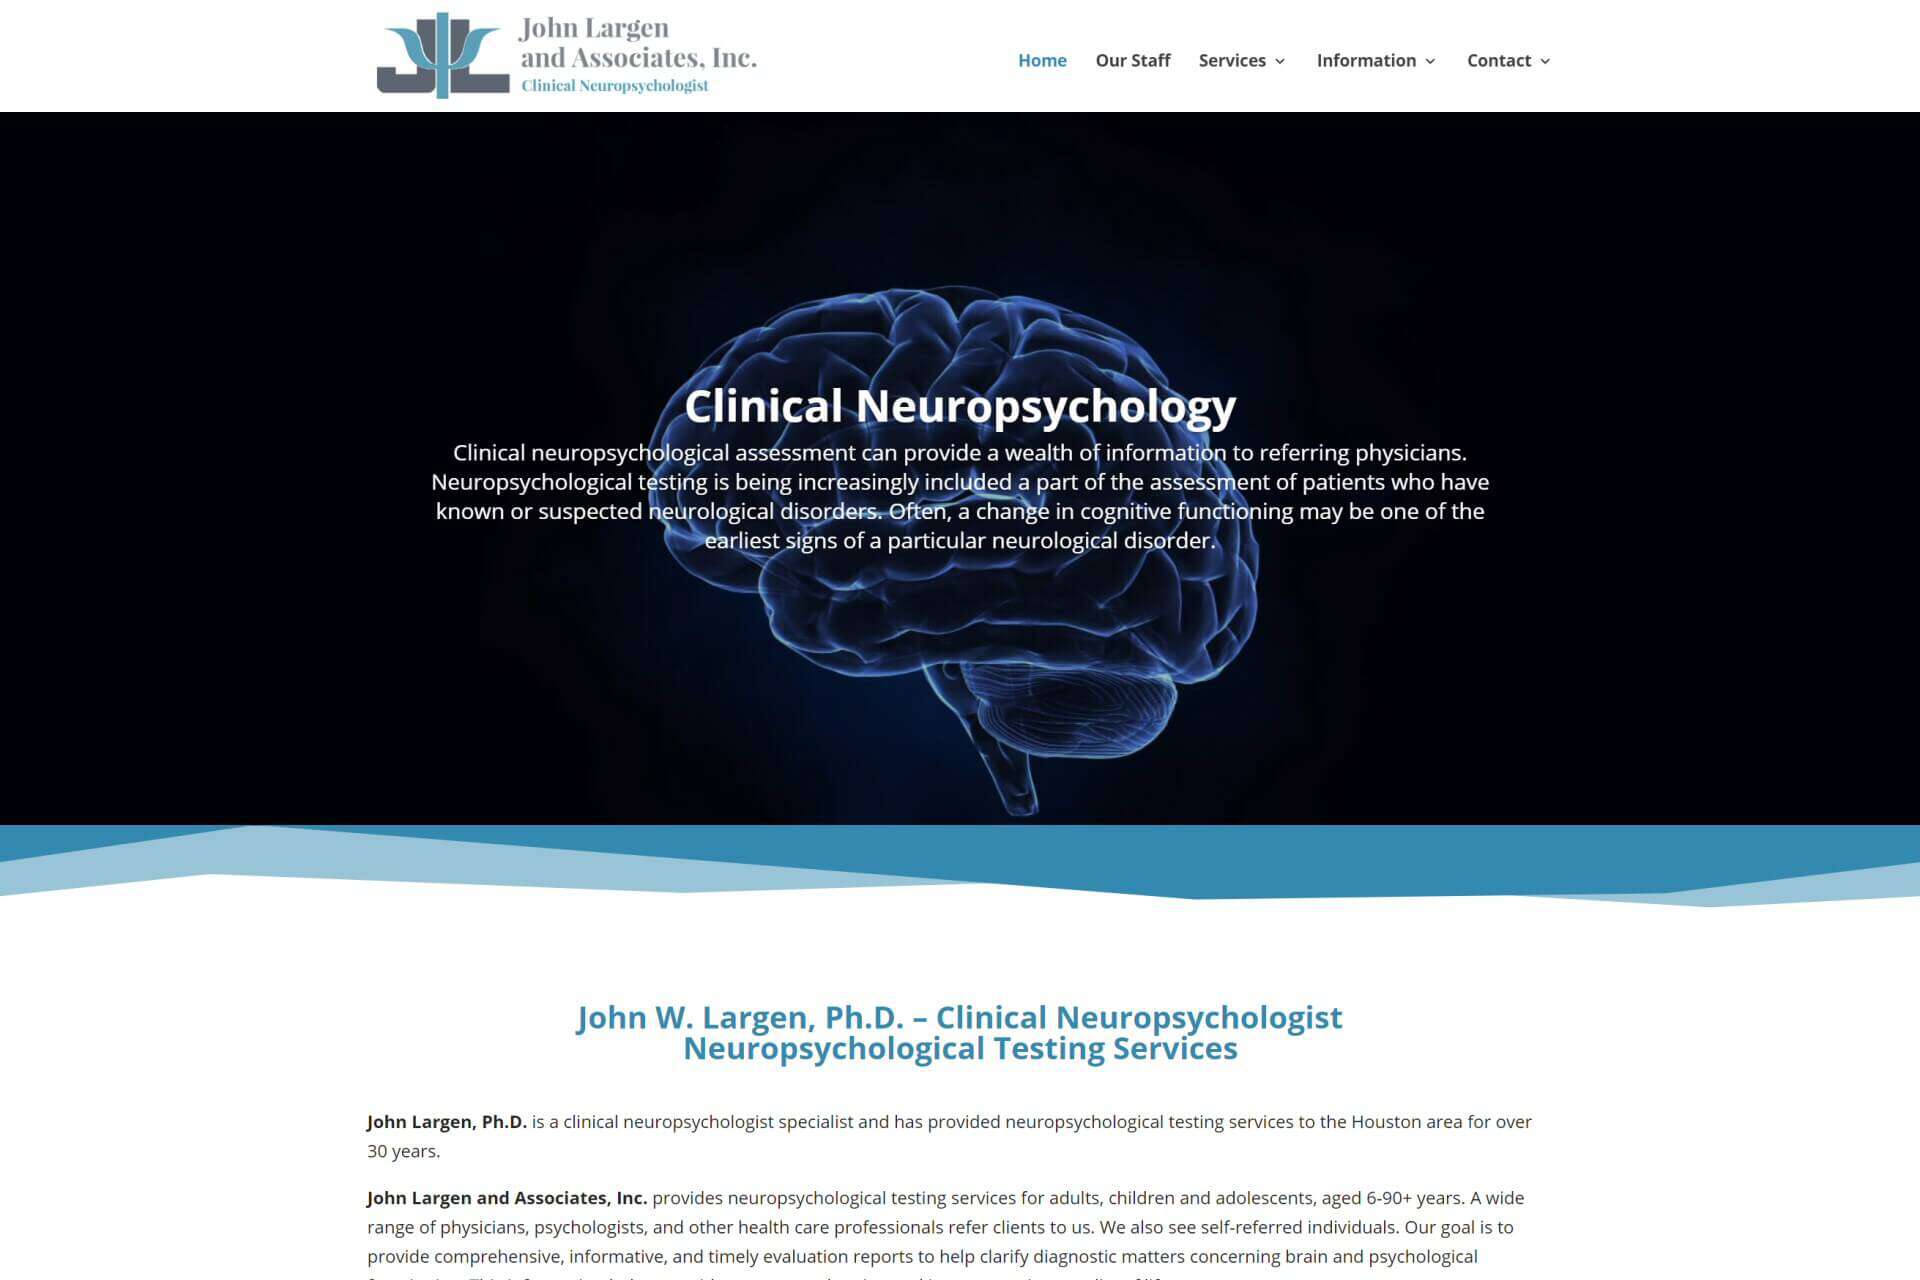 John W. Largen & Associates Neuropsychological Testing Services